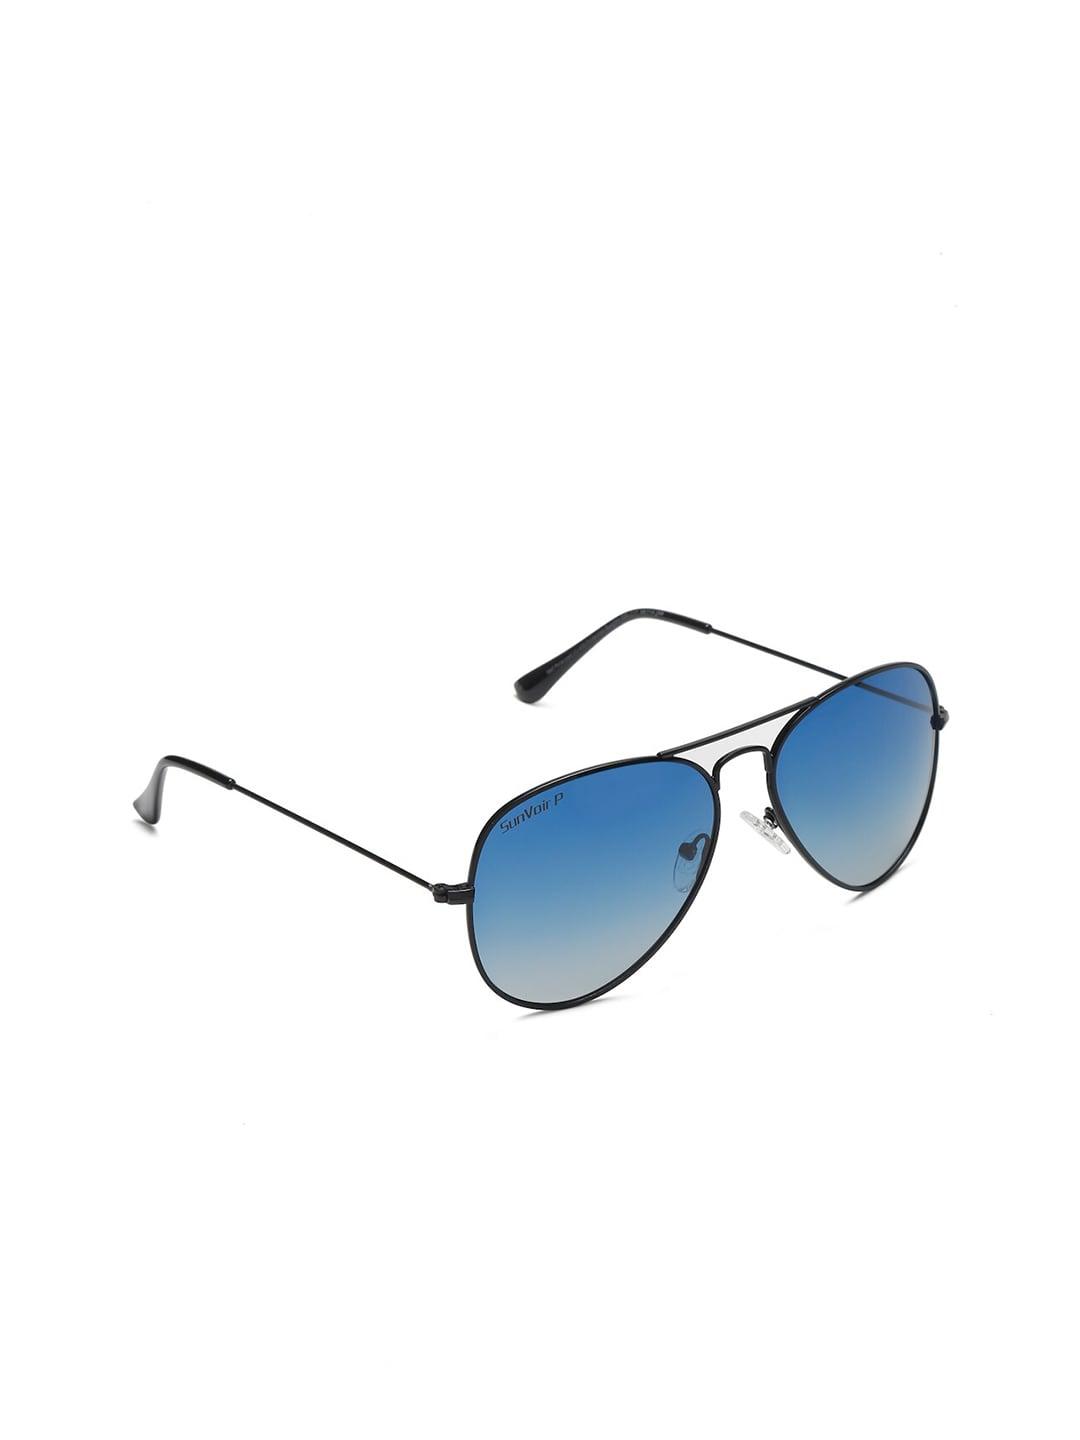 sunvoir unisex blue lens & black aviator sunglasses with polarised lens